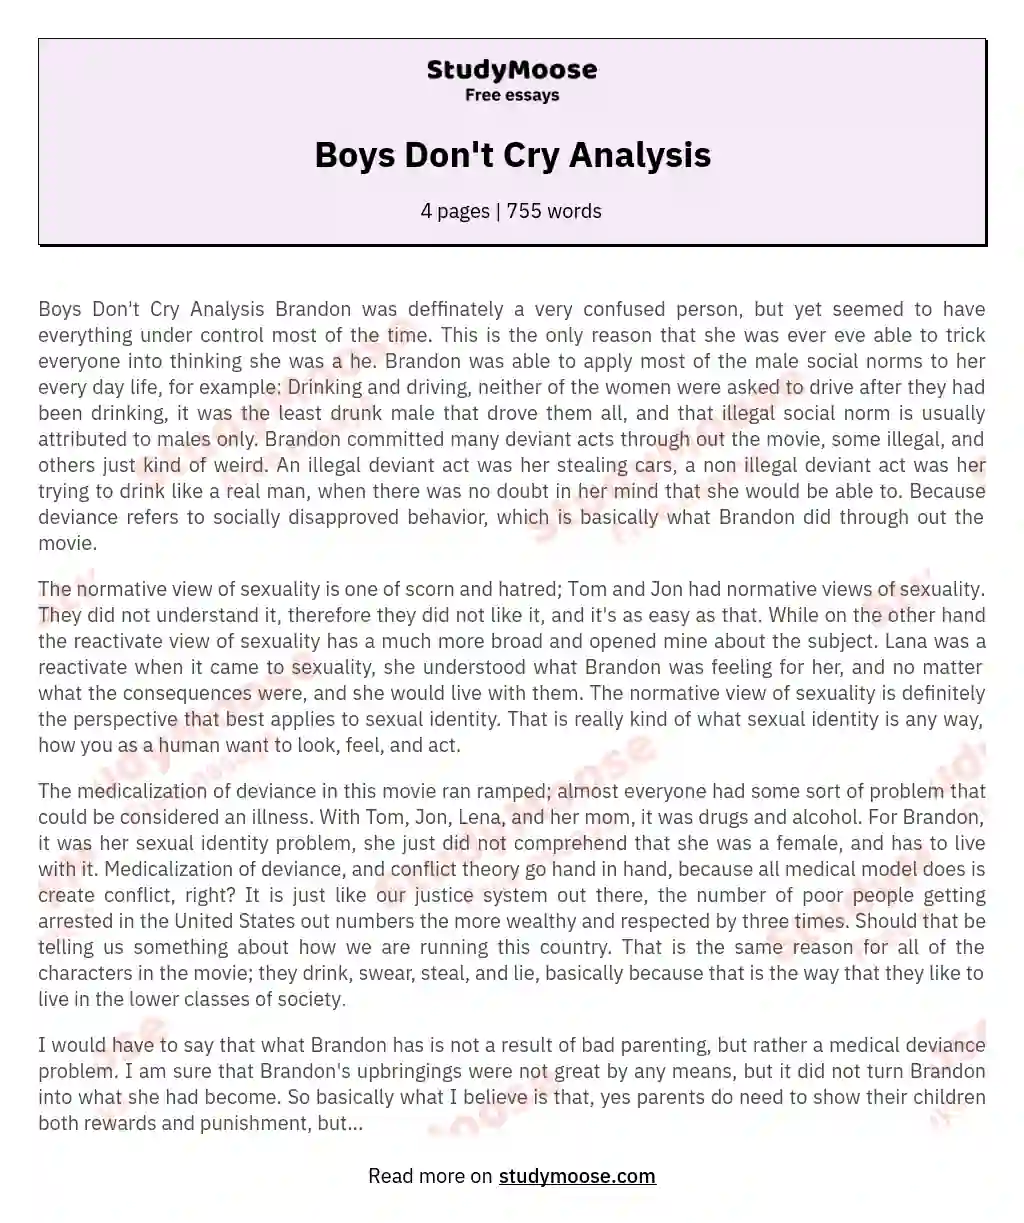 Boys Don't Cry Analysis